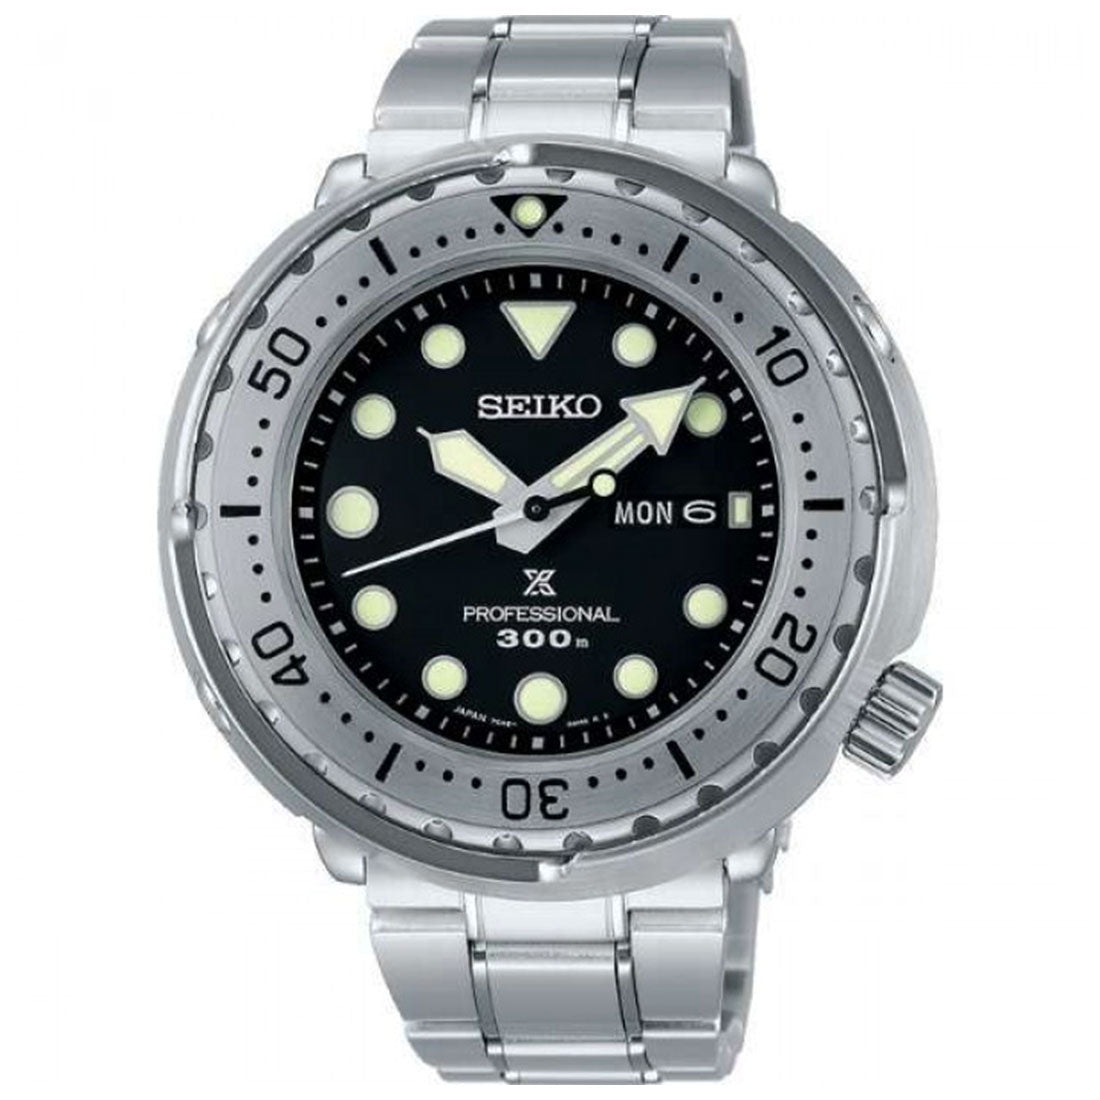 Seiko Prospex JDM Marinemaster SBBN049 Professional Divers Japan Watch -Seiko